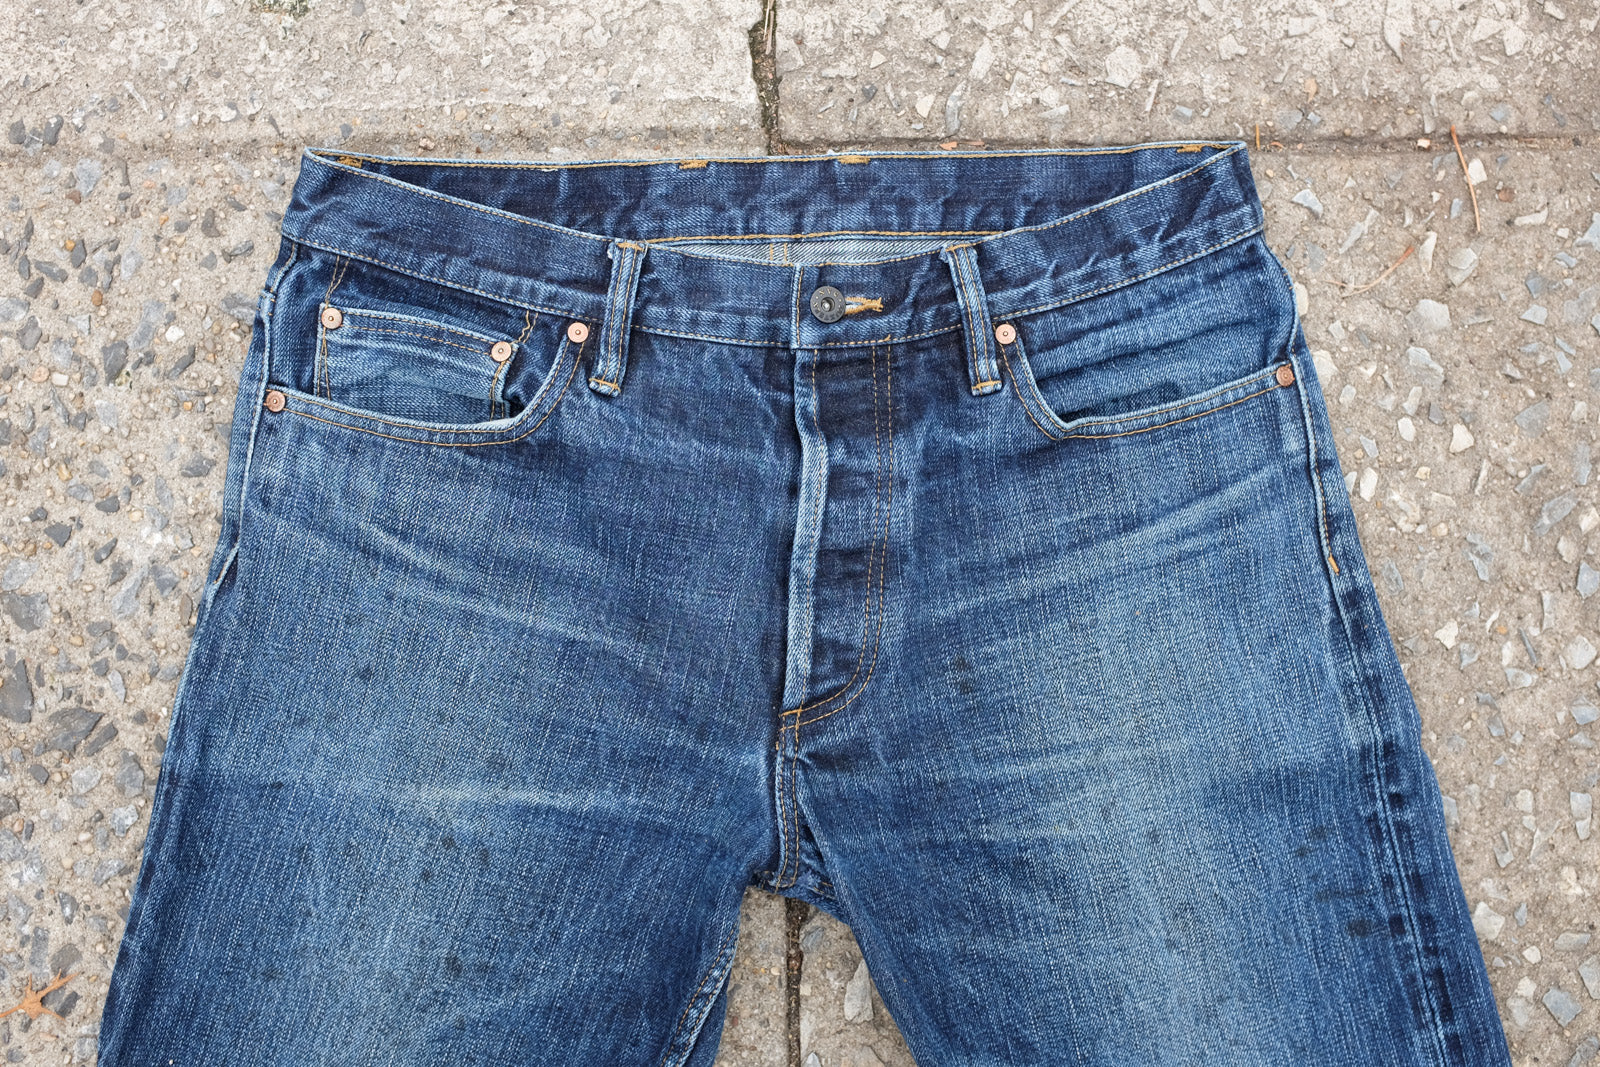 Closeup shot of top block of the jeans.